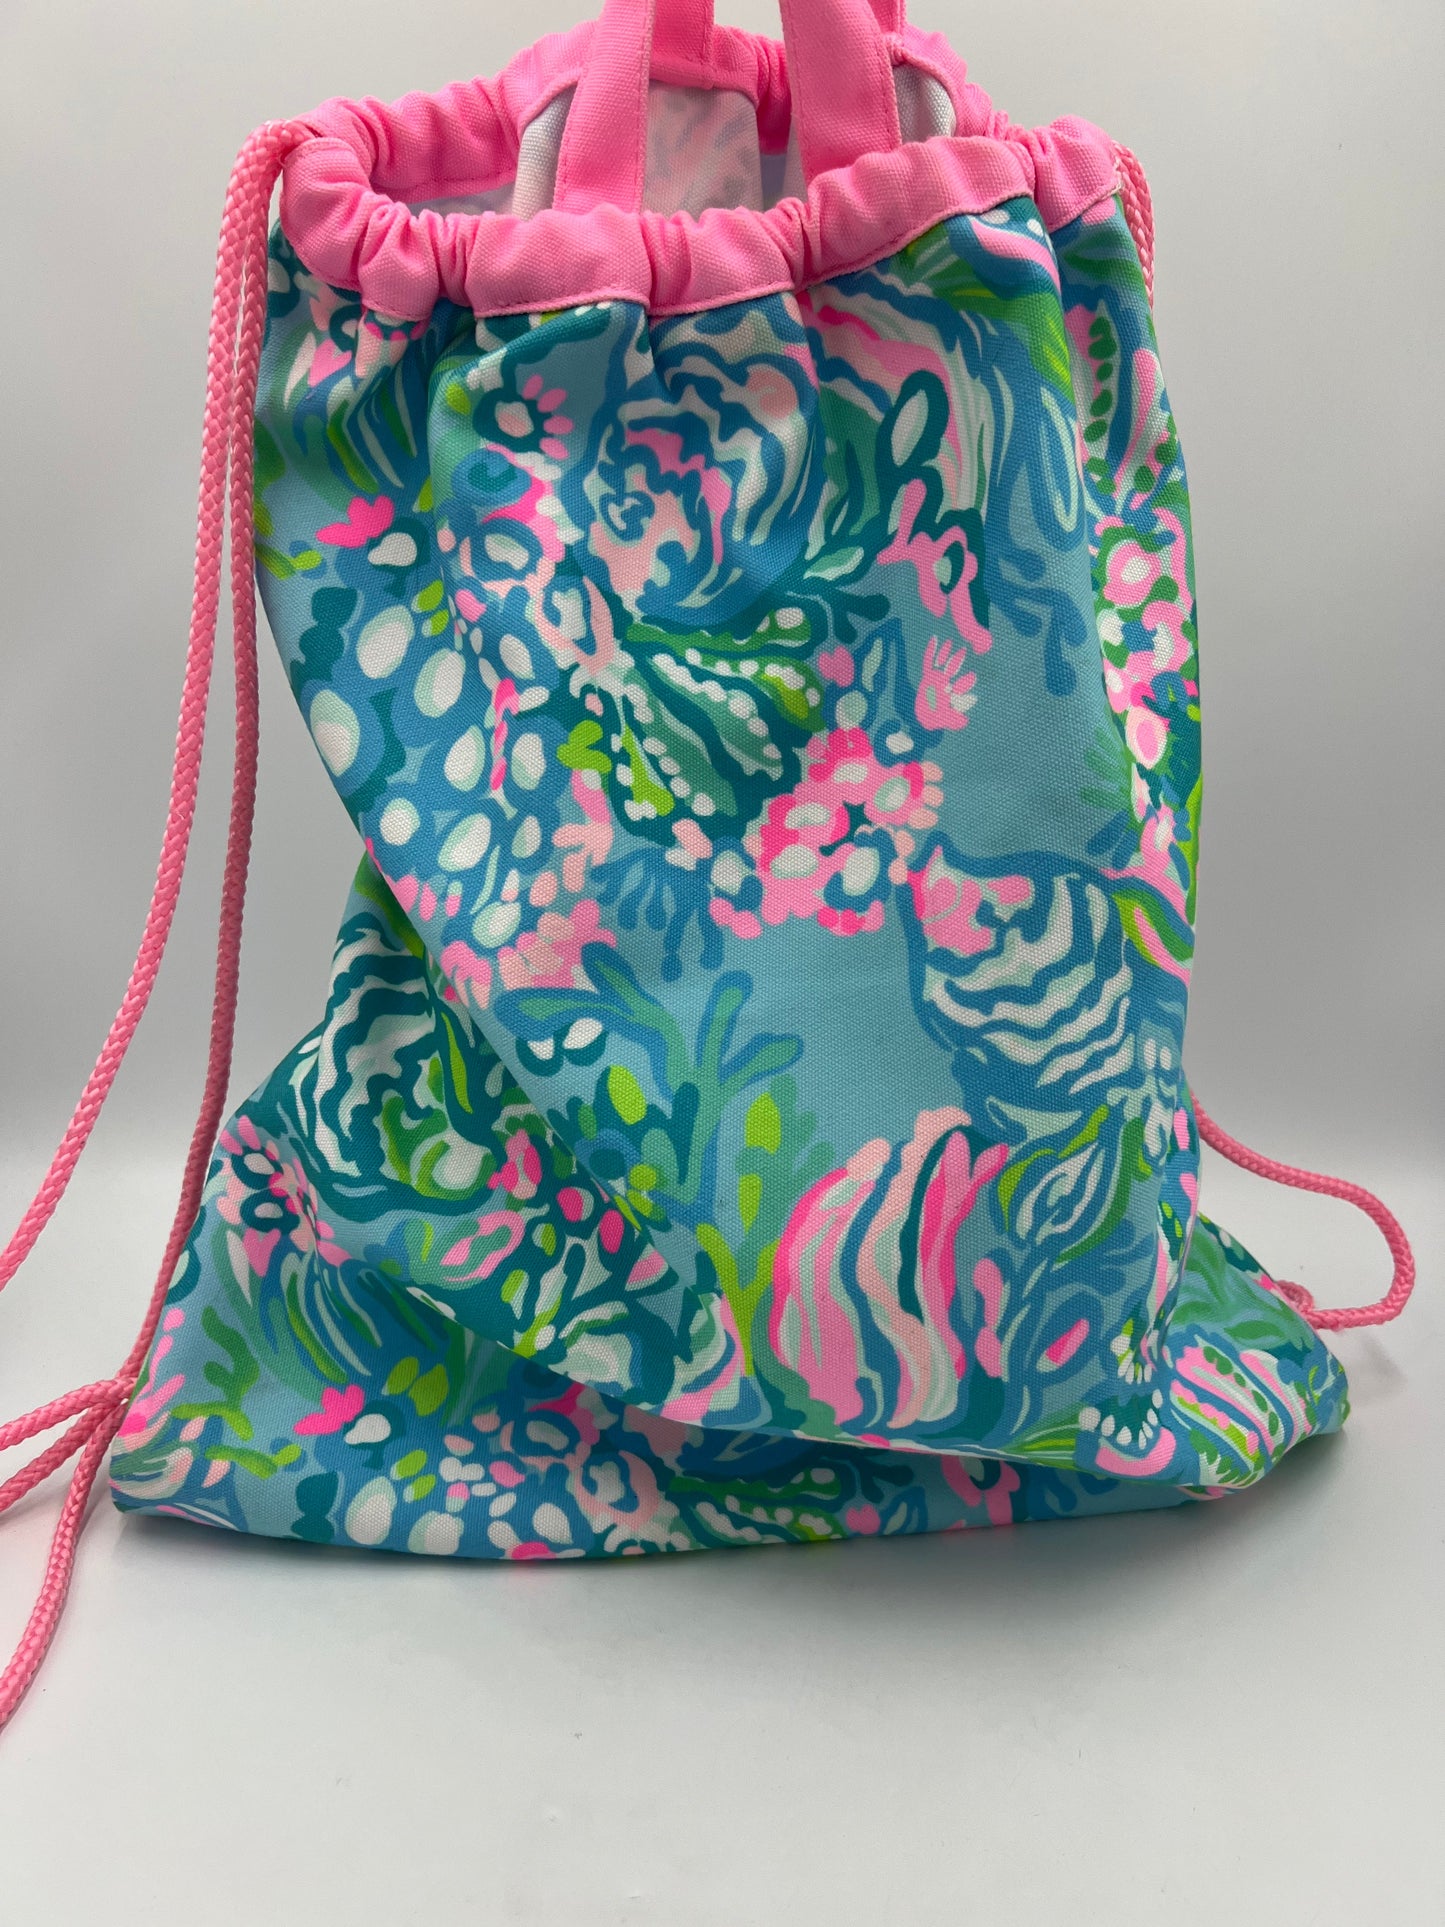 Backpack / Handbag By Lilly Pulitzer